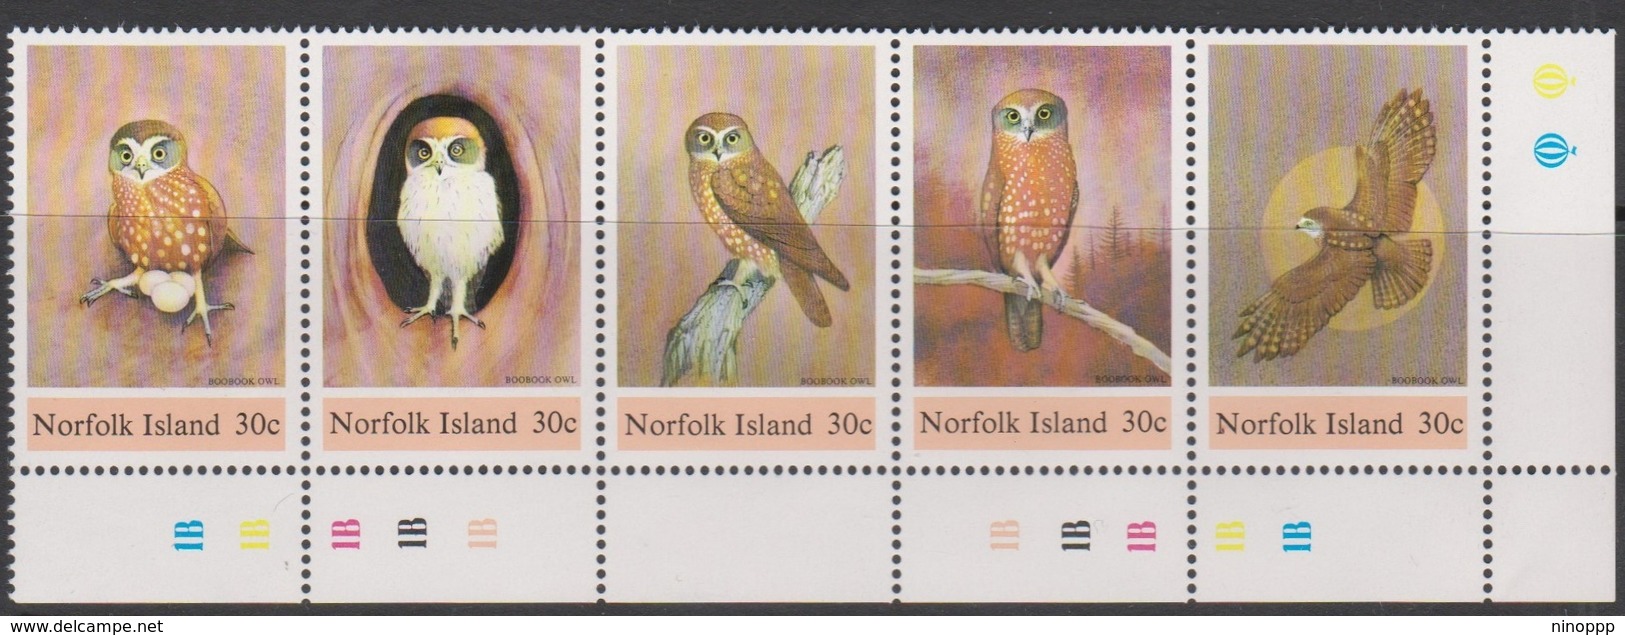 Norfolk Island ASC 336-340 1984 Boobook Owl, Mint Never Hinged - Norfolk Island